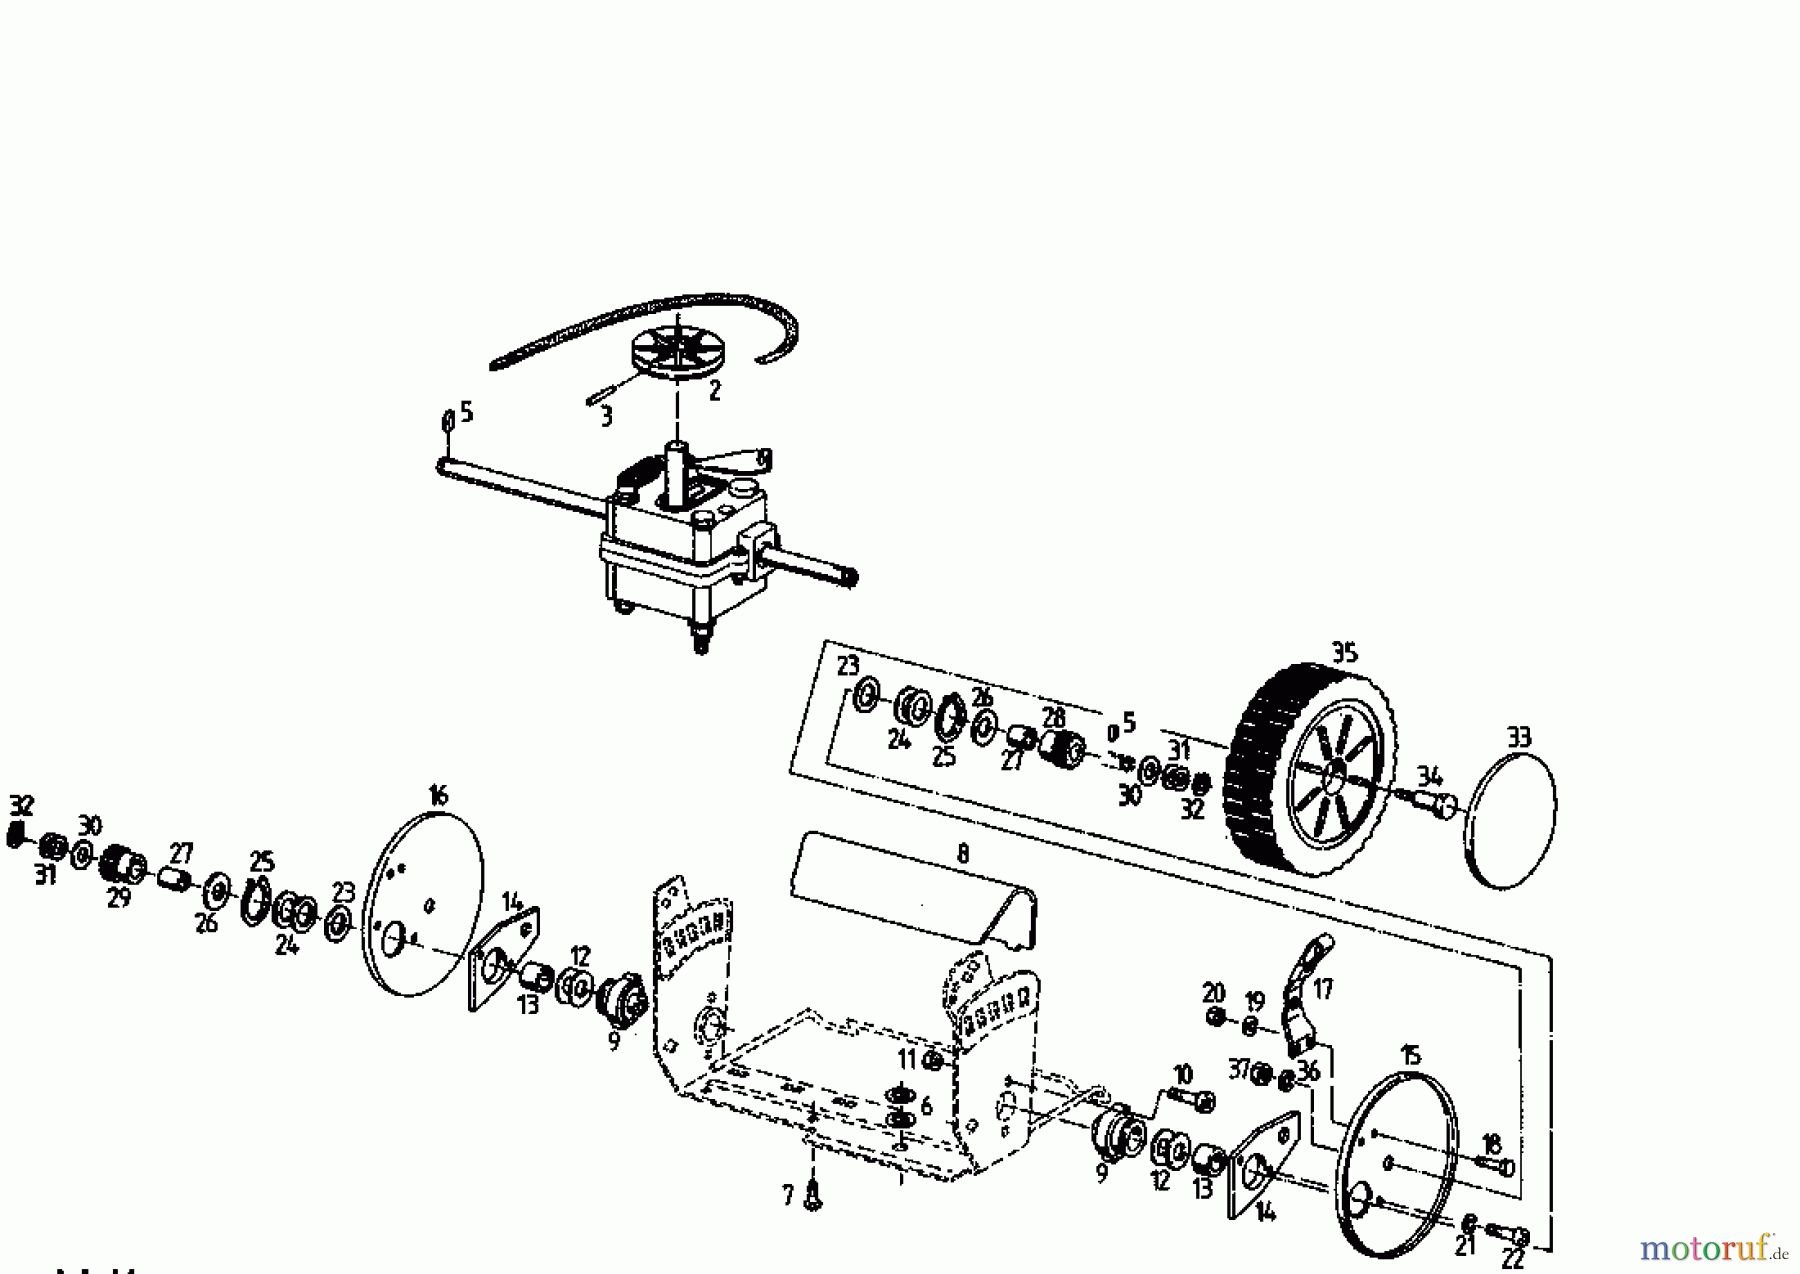  Kmg Petrol mower self propelled KMG 46 BA 04025.06  (1995) Gearbox, Wheels, Cutting hight adjustment